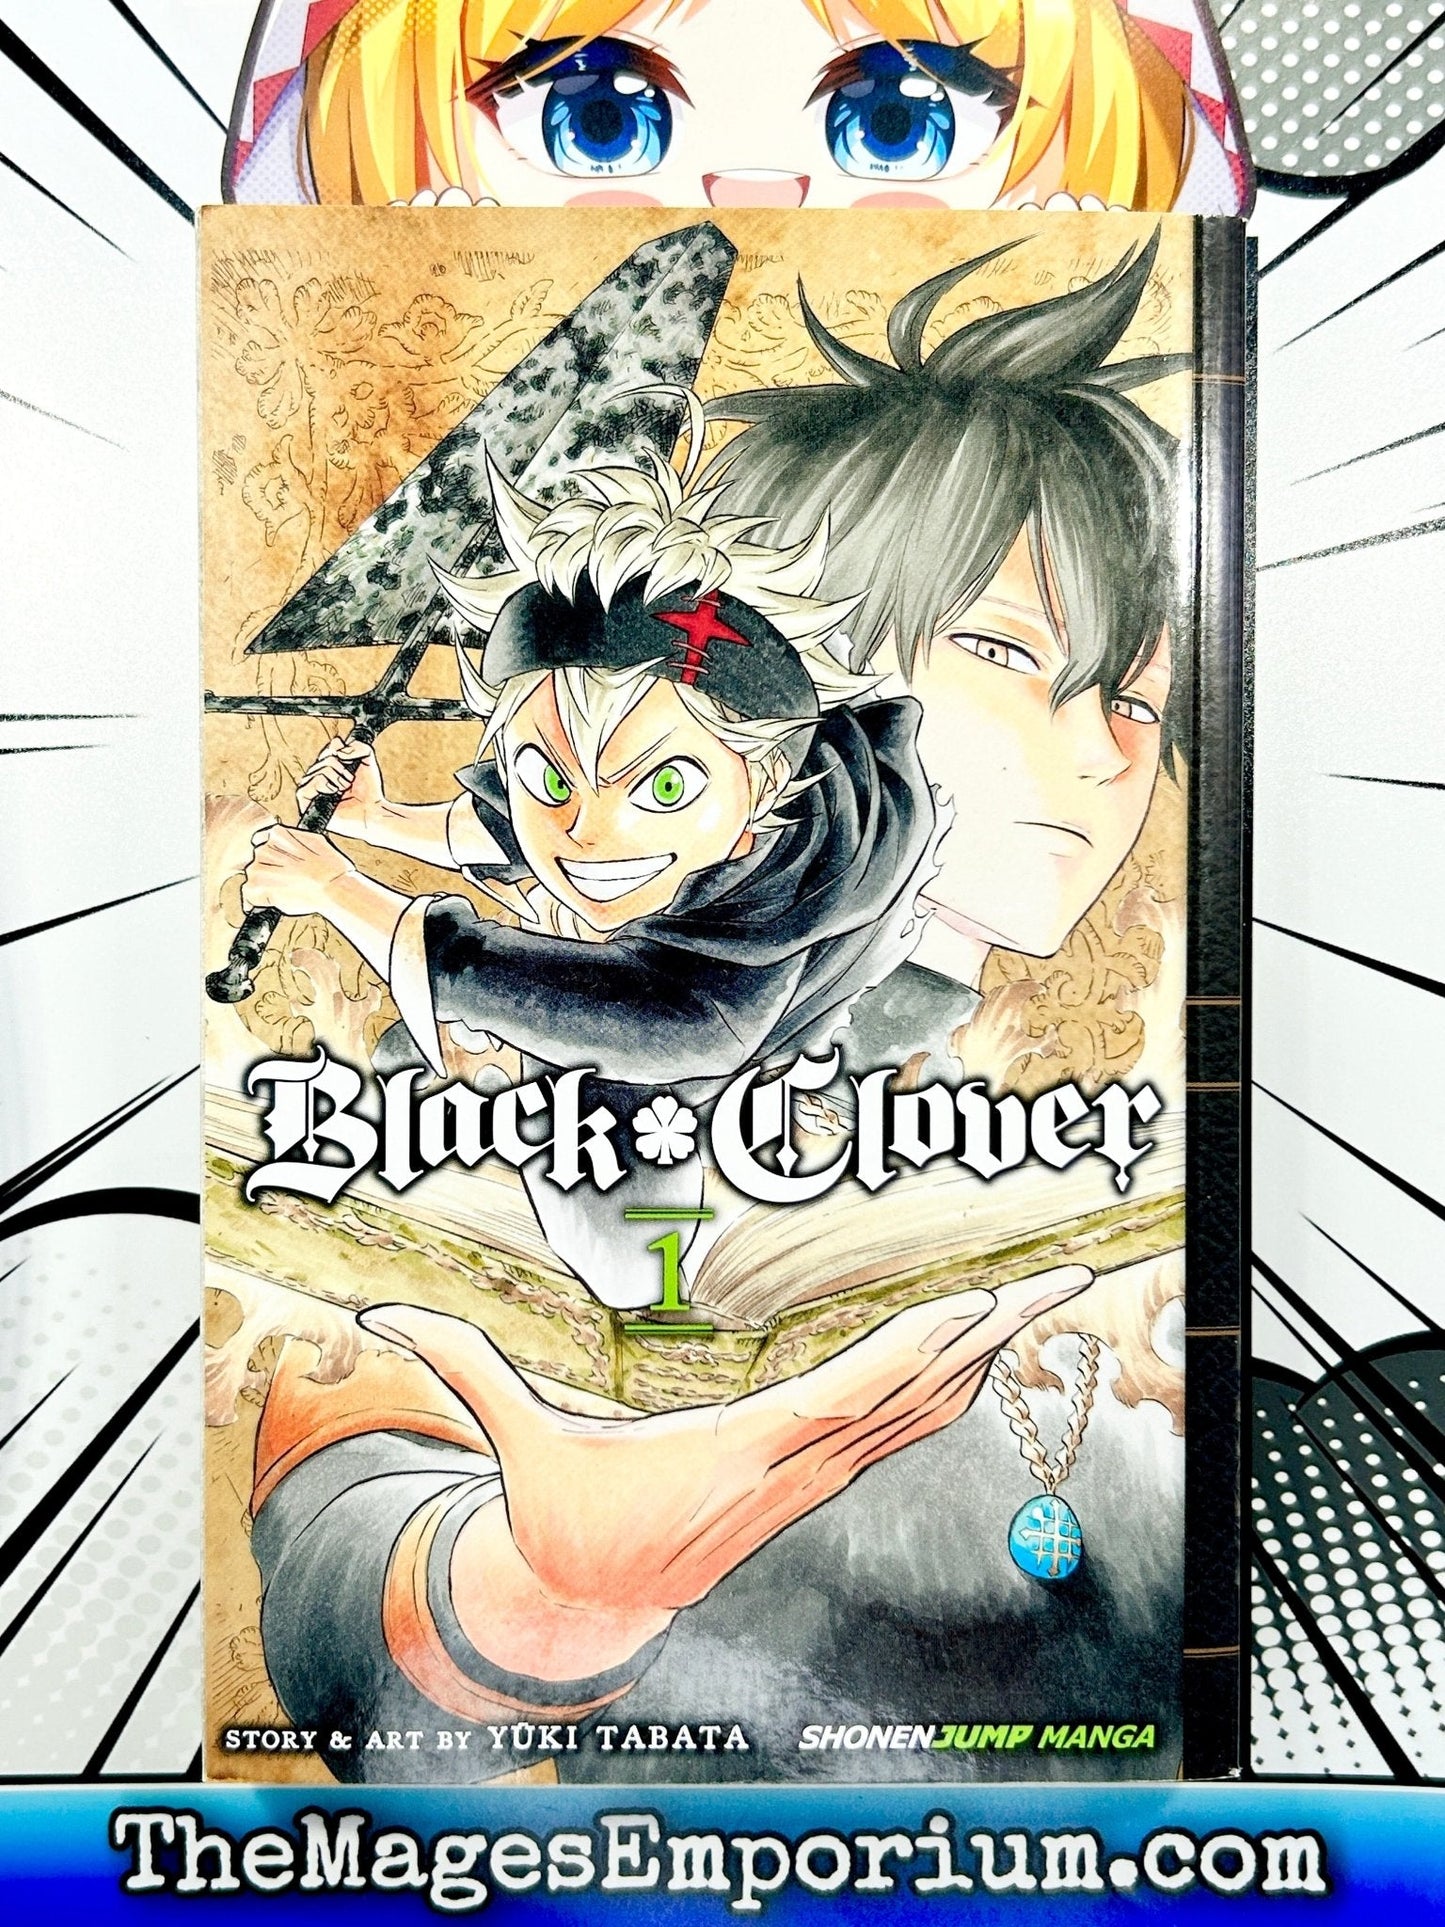 Black Clover Vol 1